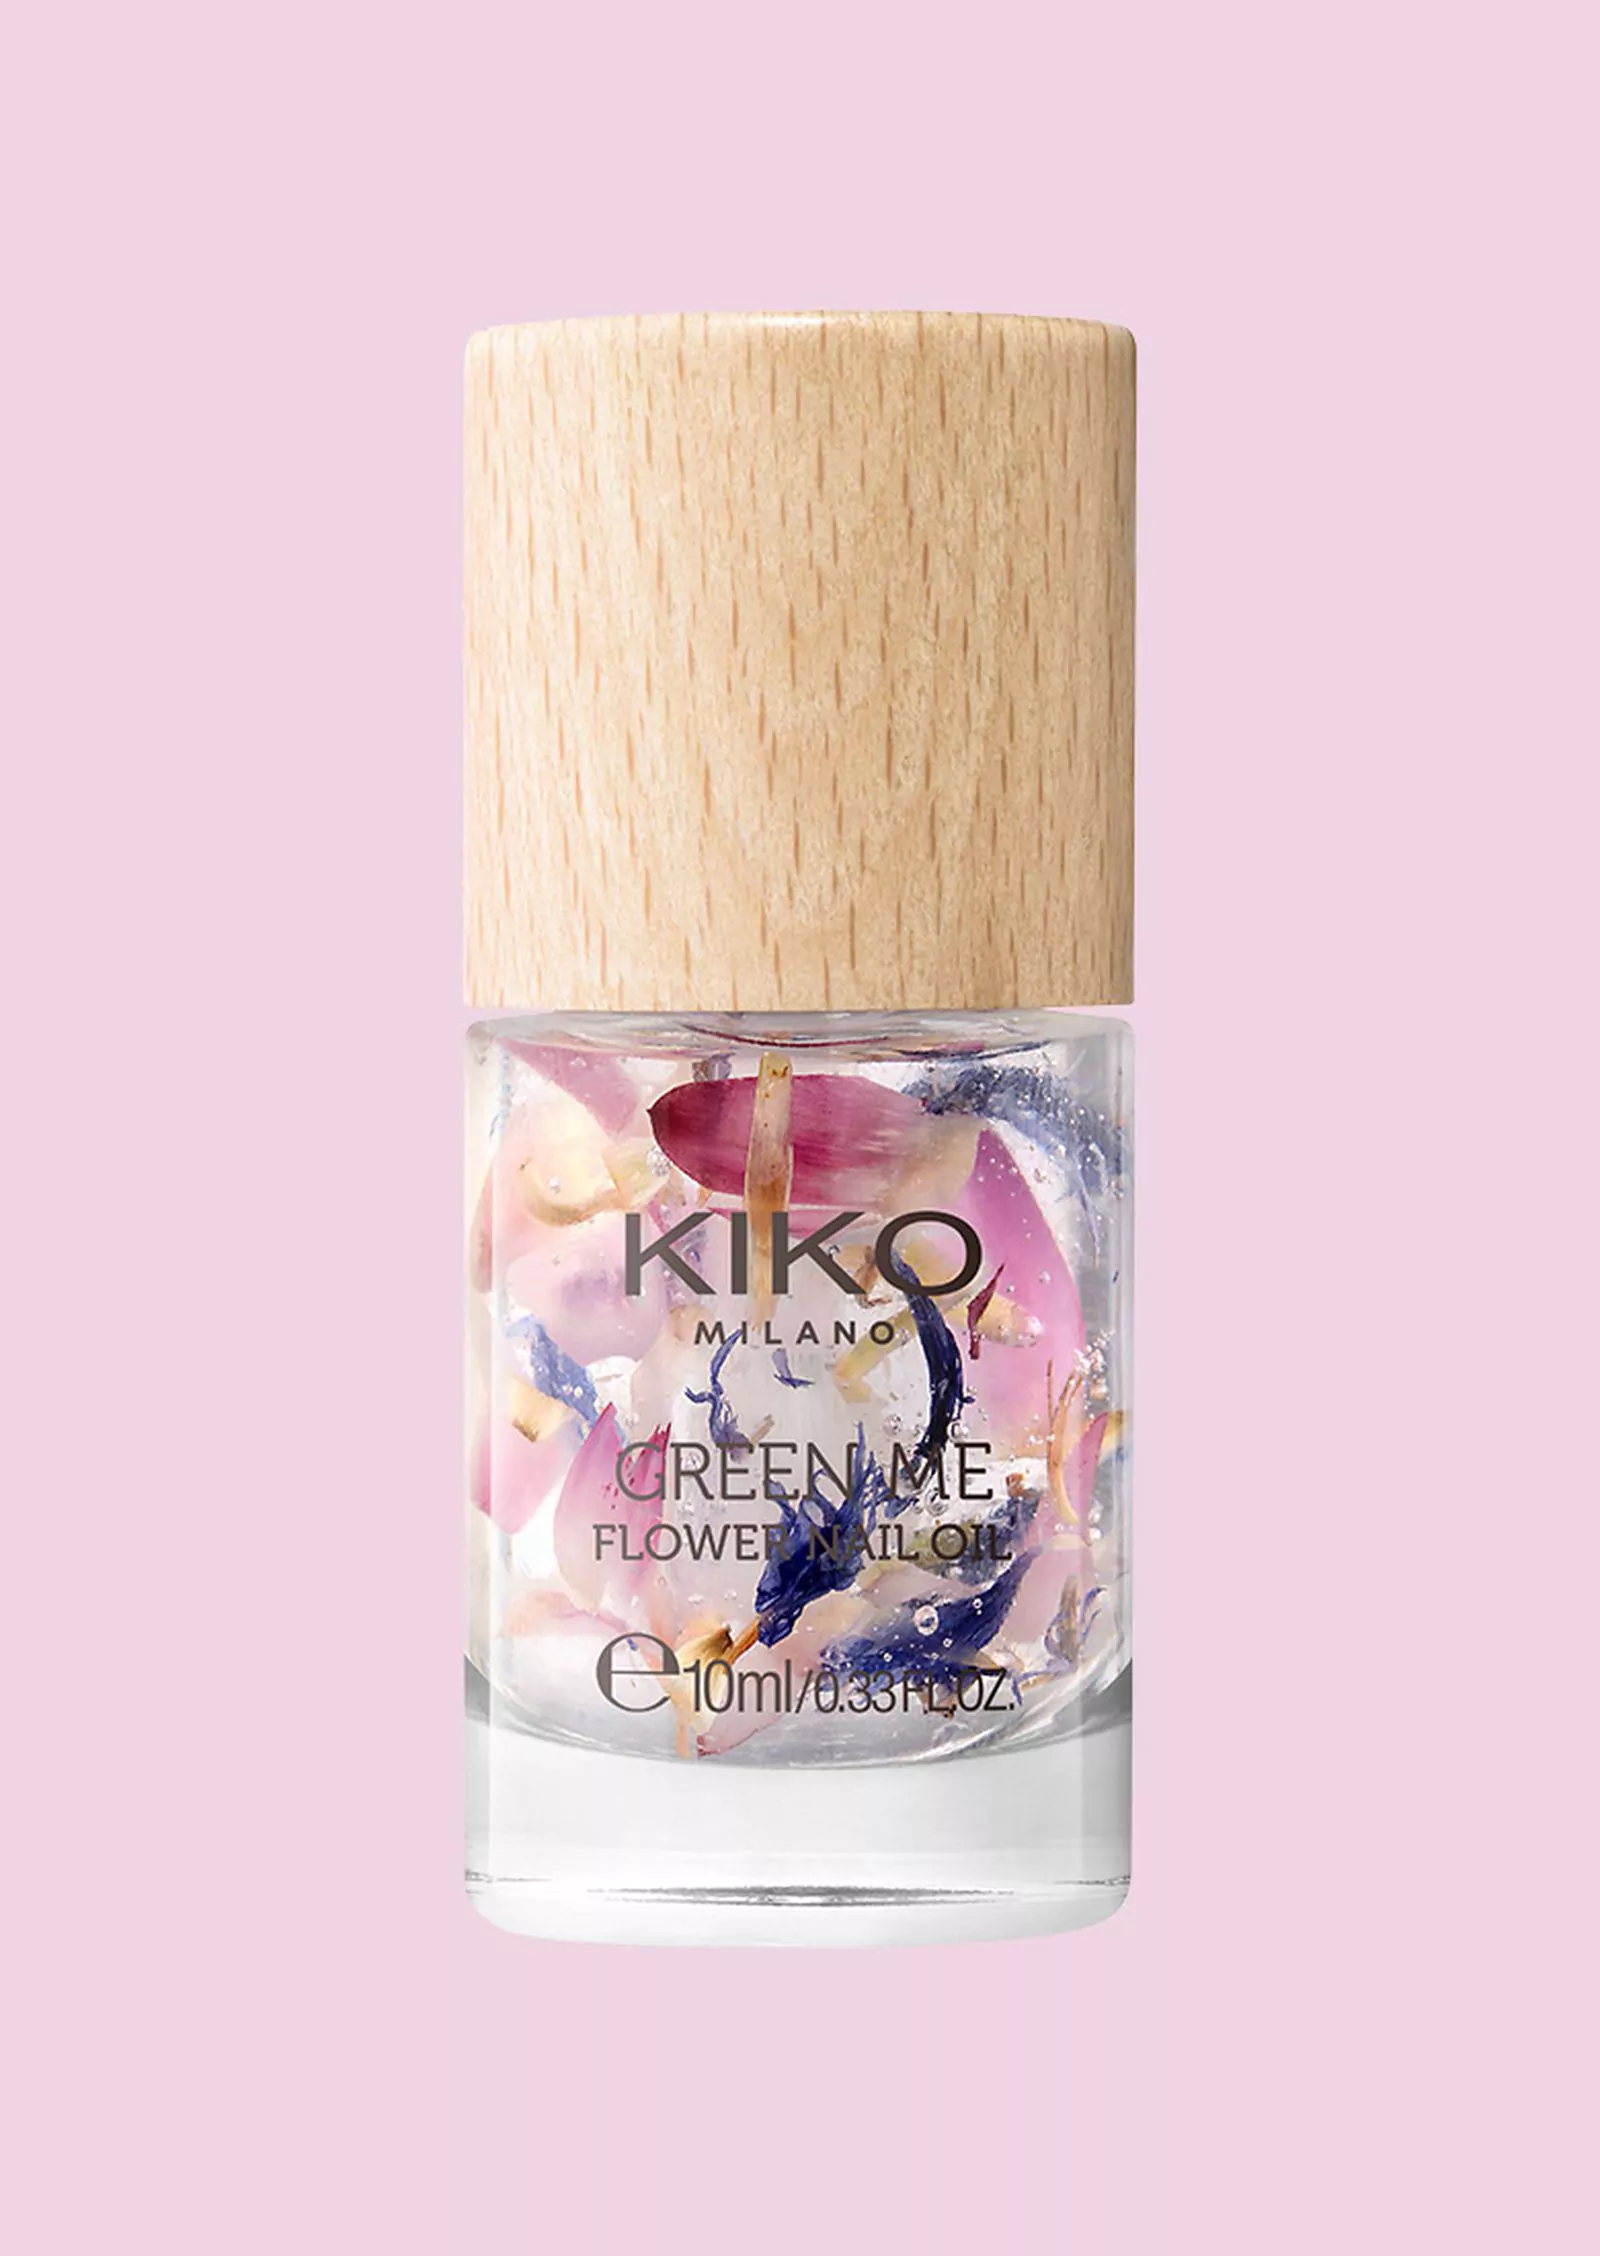 Kiko Milano Flower Nail Oil, коллекция Green Me, фото 1